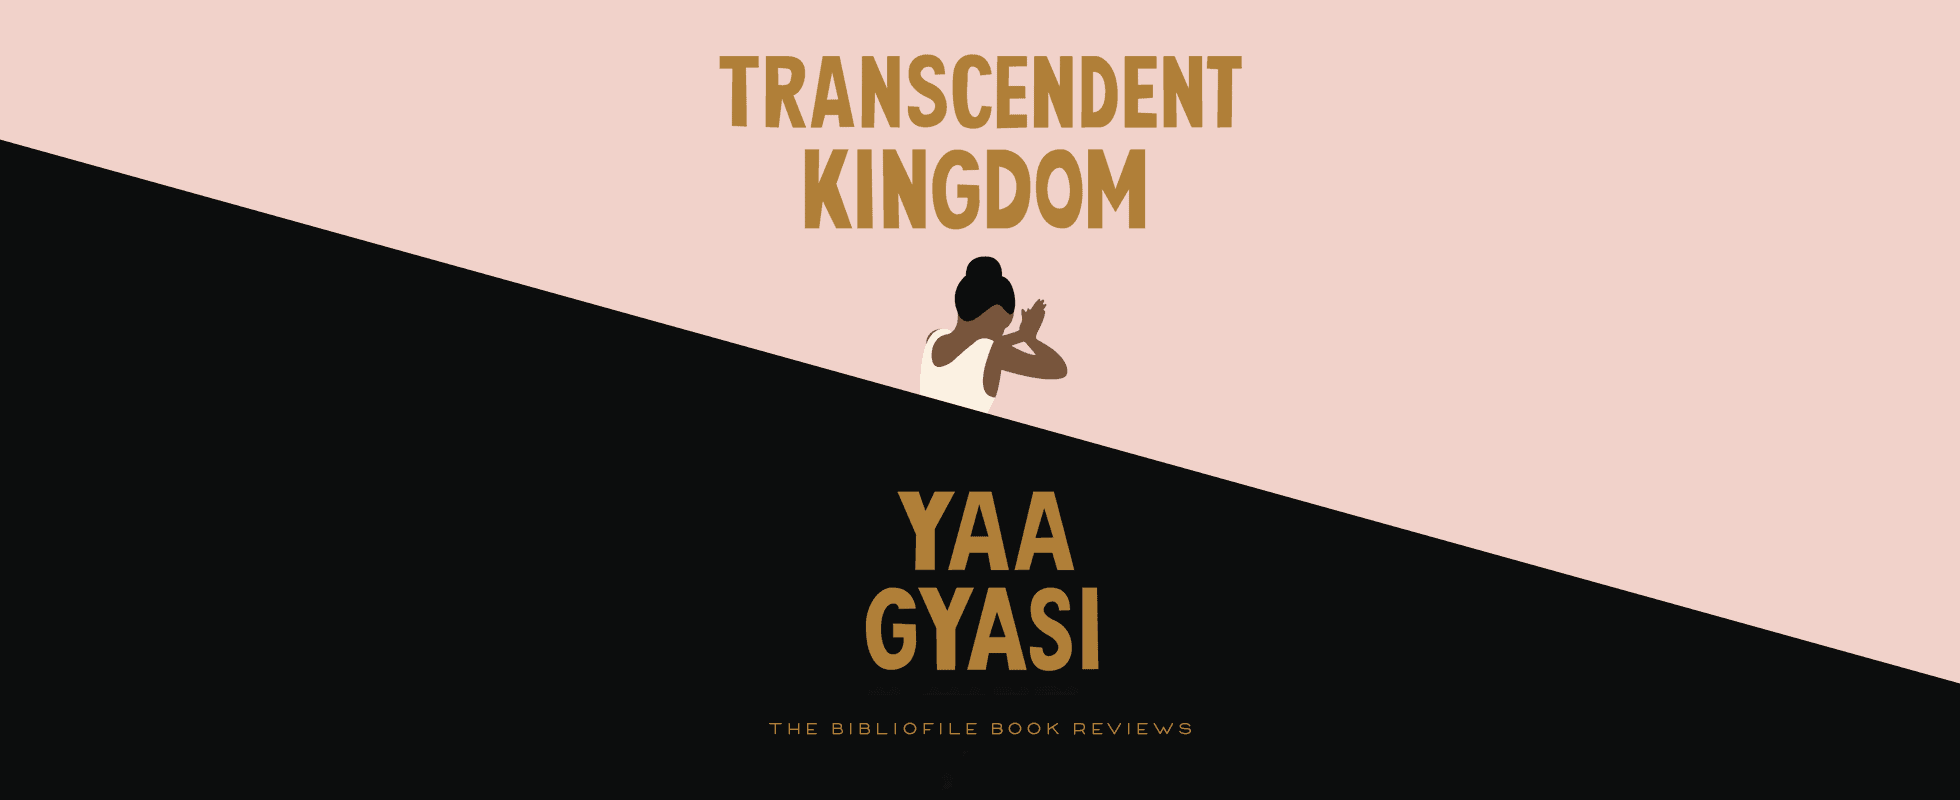 yaa gyasi的超越王国 - 书籍摘要，分析，章节摘要，详细的情节概要，书籍评论